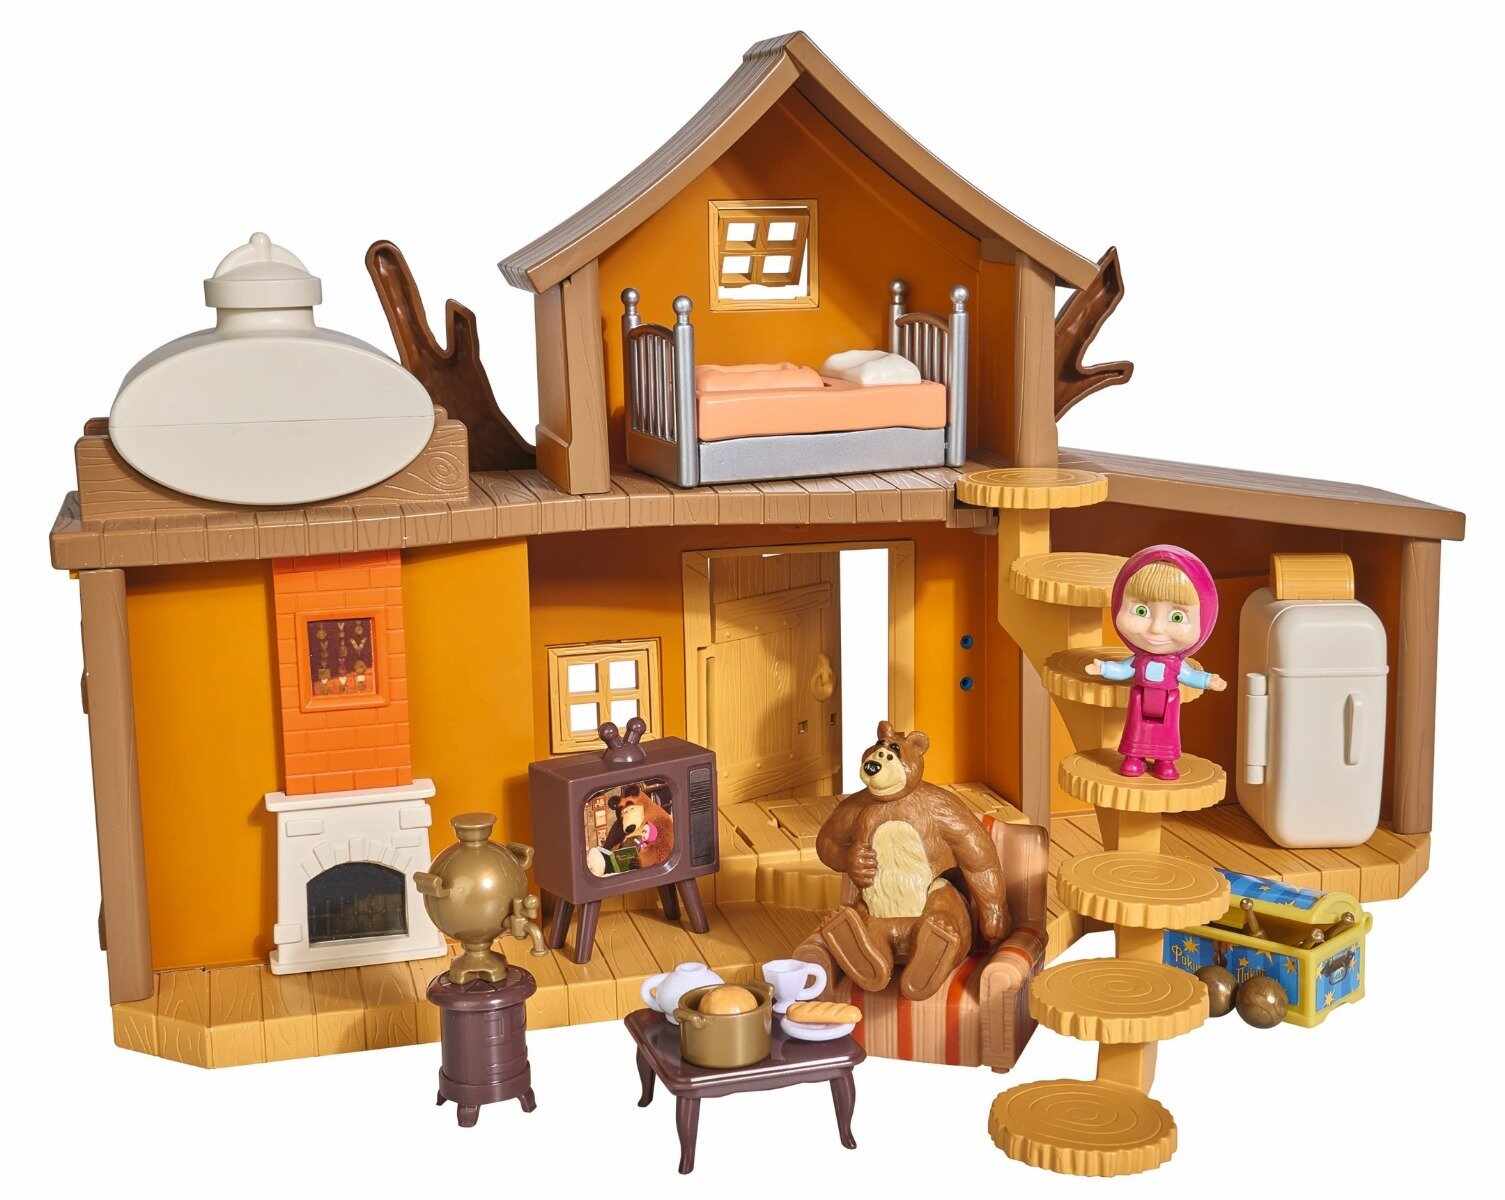 Set Masha Play - Big Bear House